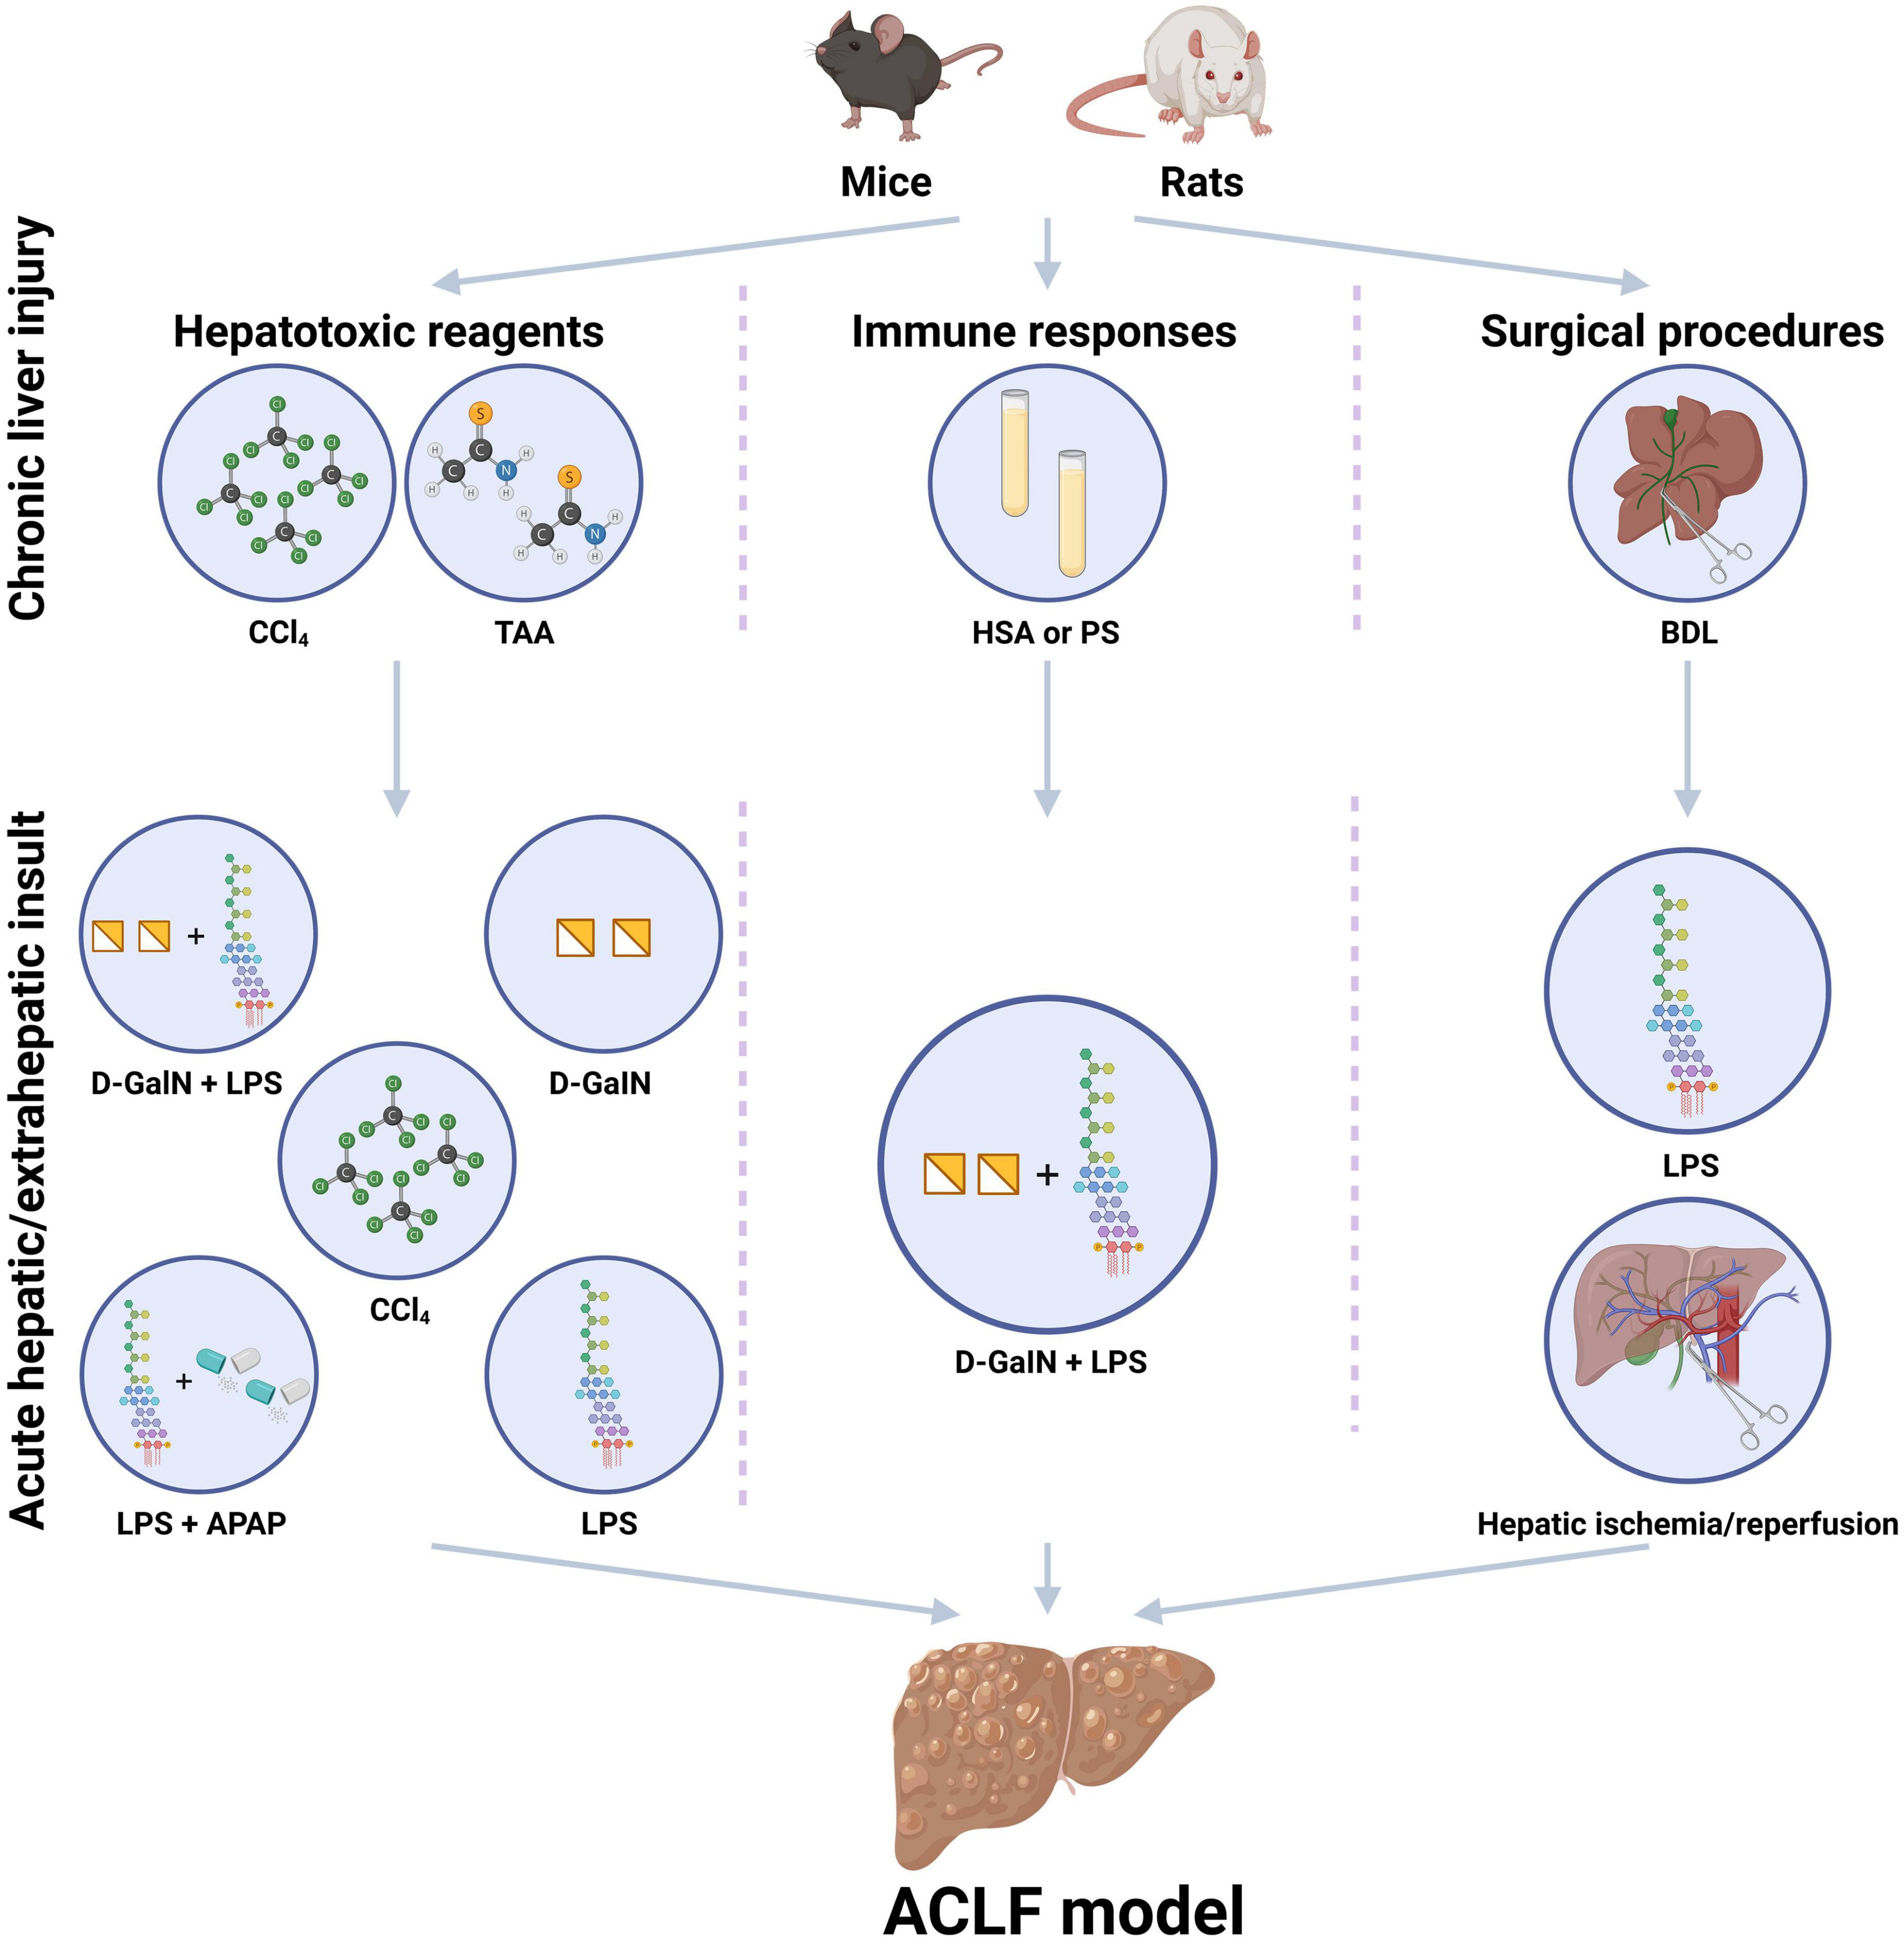 The progress to establish optimal animal models for the study of acute-on-chronic liver failure